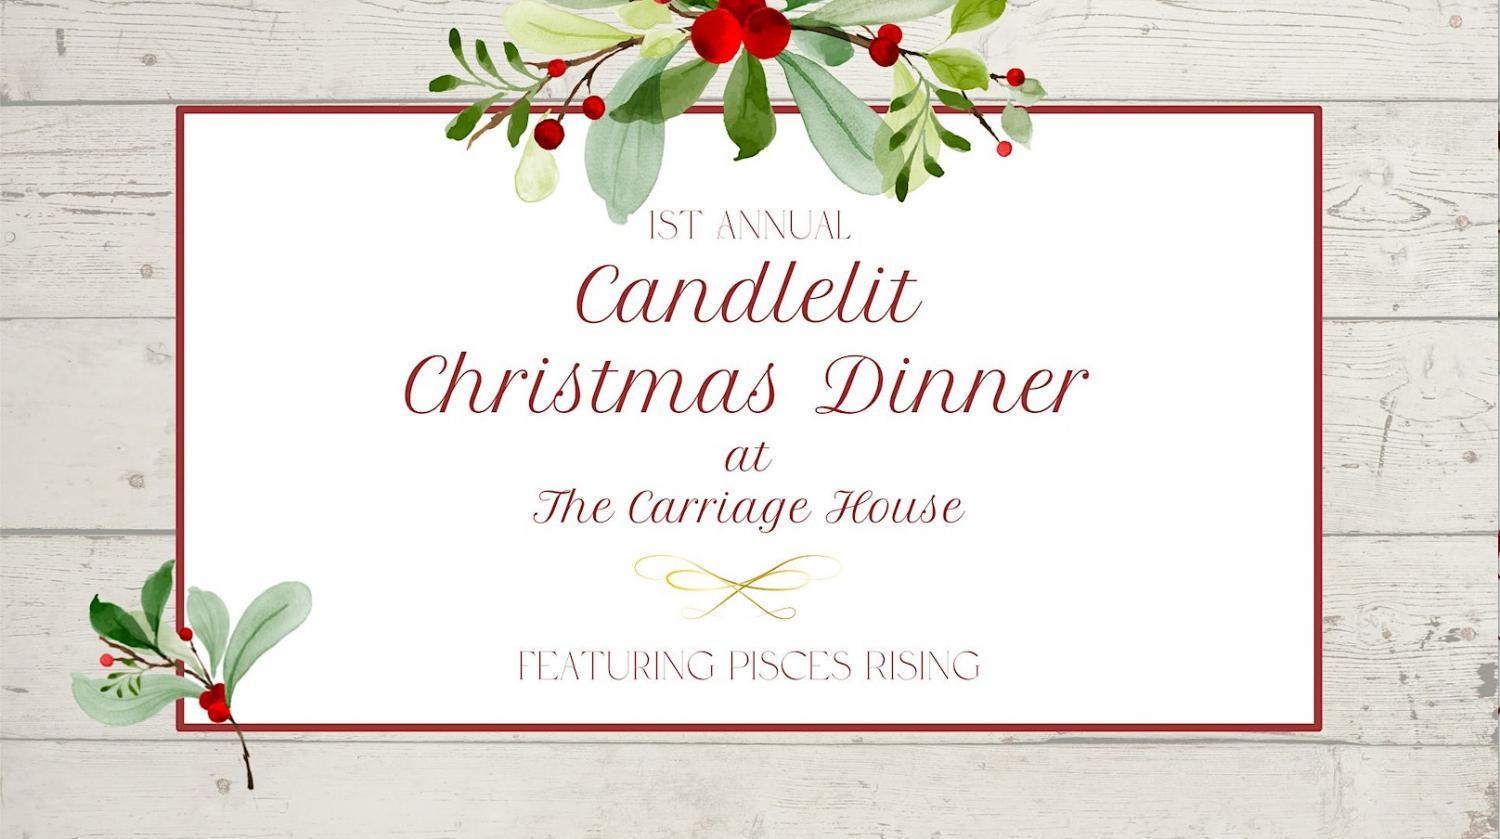 Candlelit Christmas Dinner
Sat Dec 3, 5:00 PM - Sat Dec 3, 9:00 PM
in 44 days